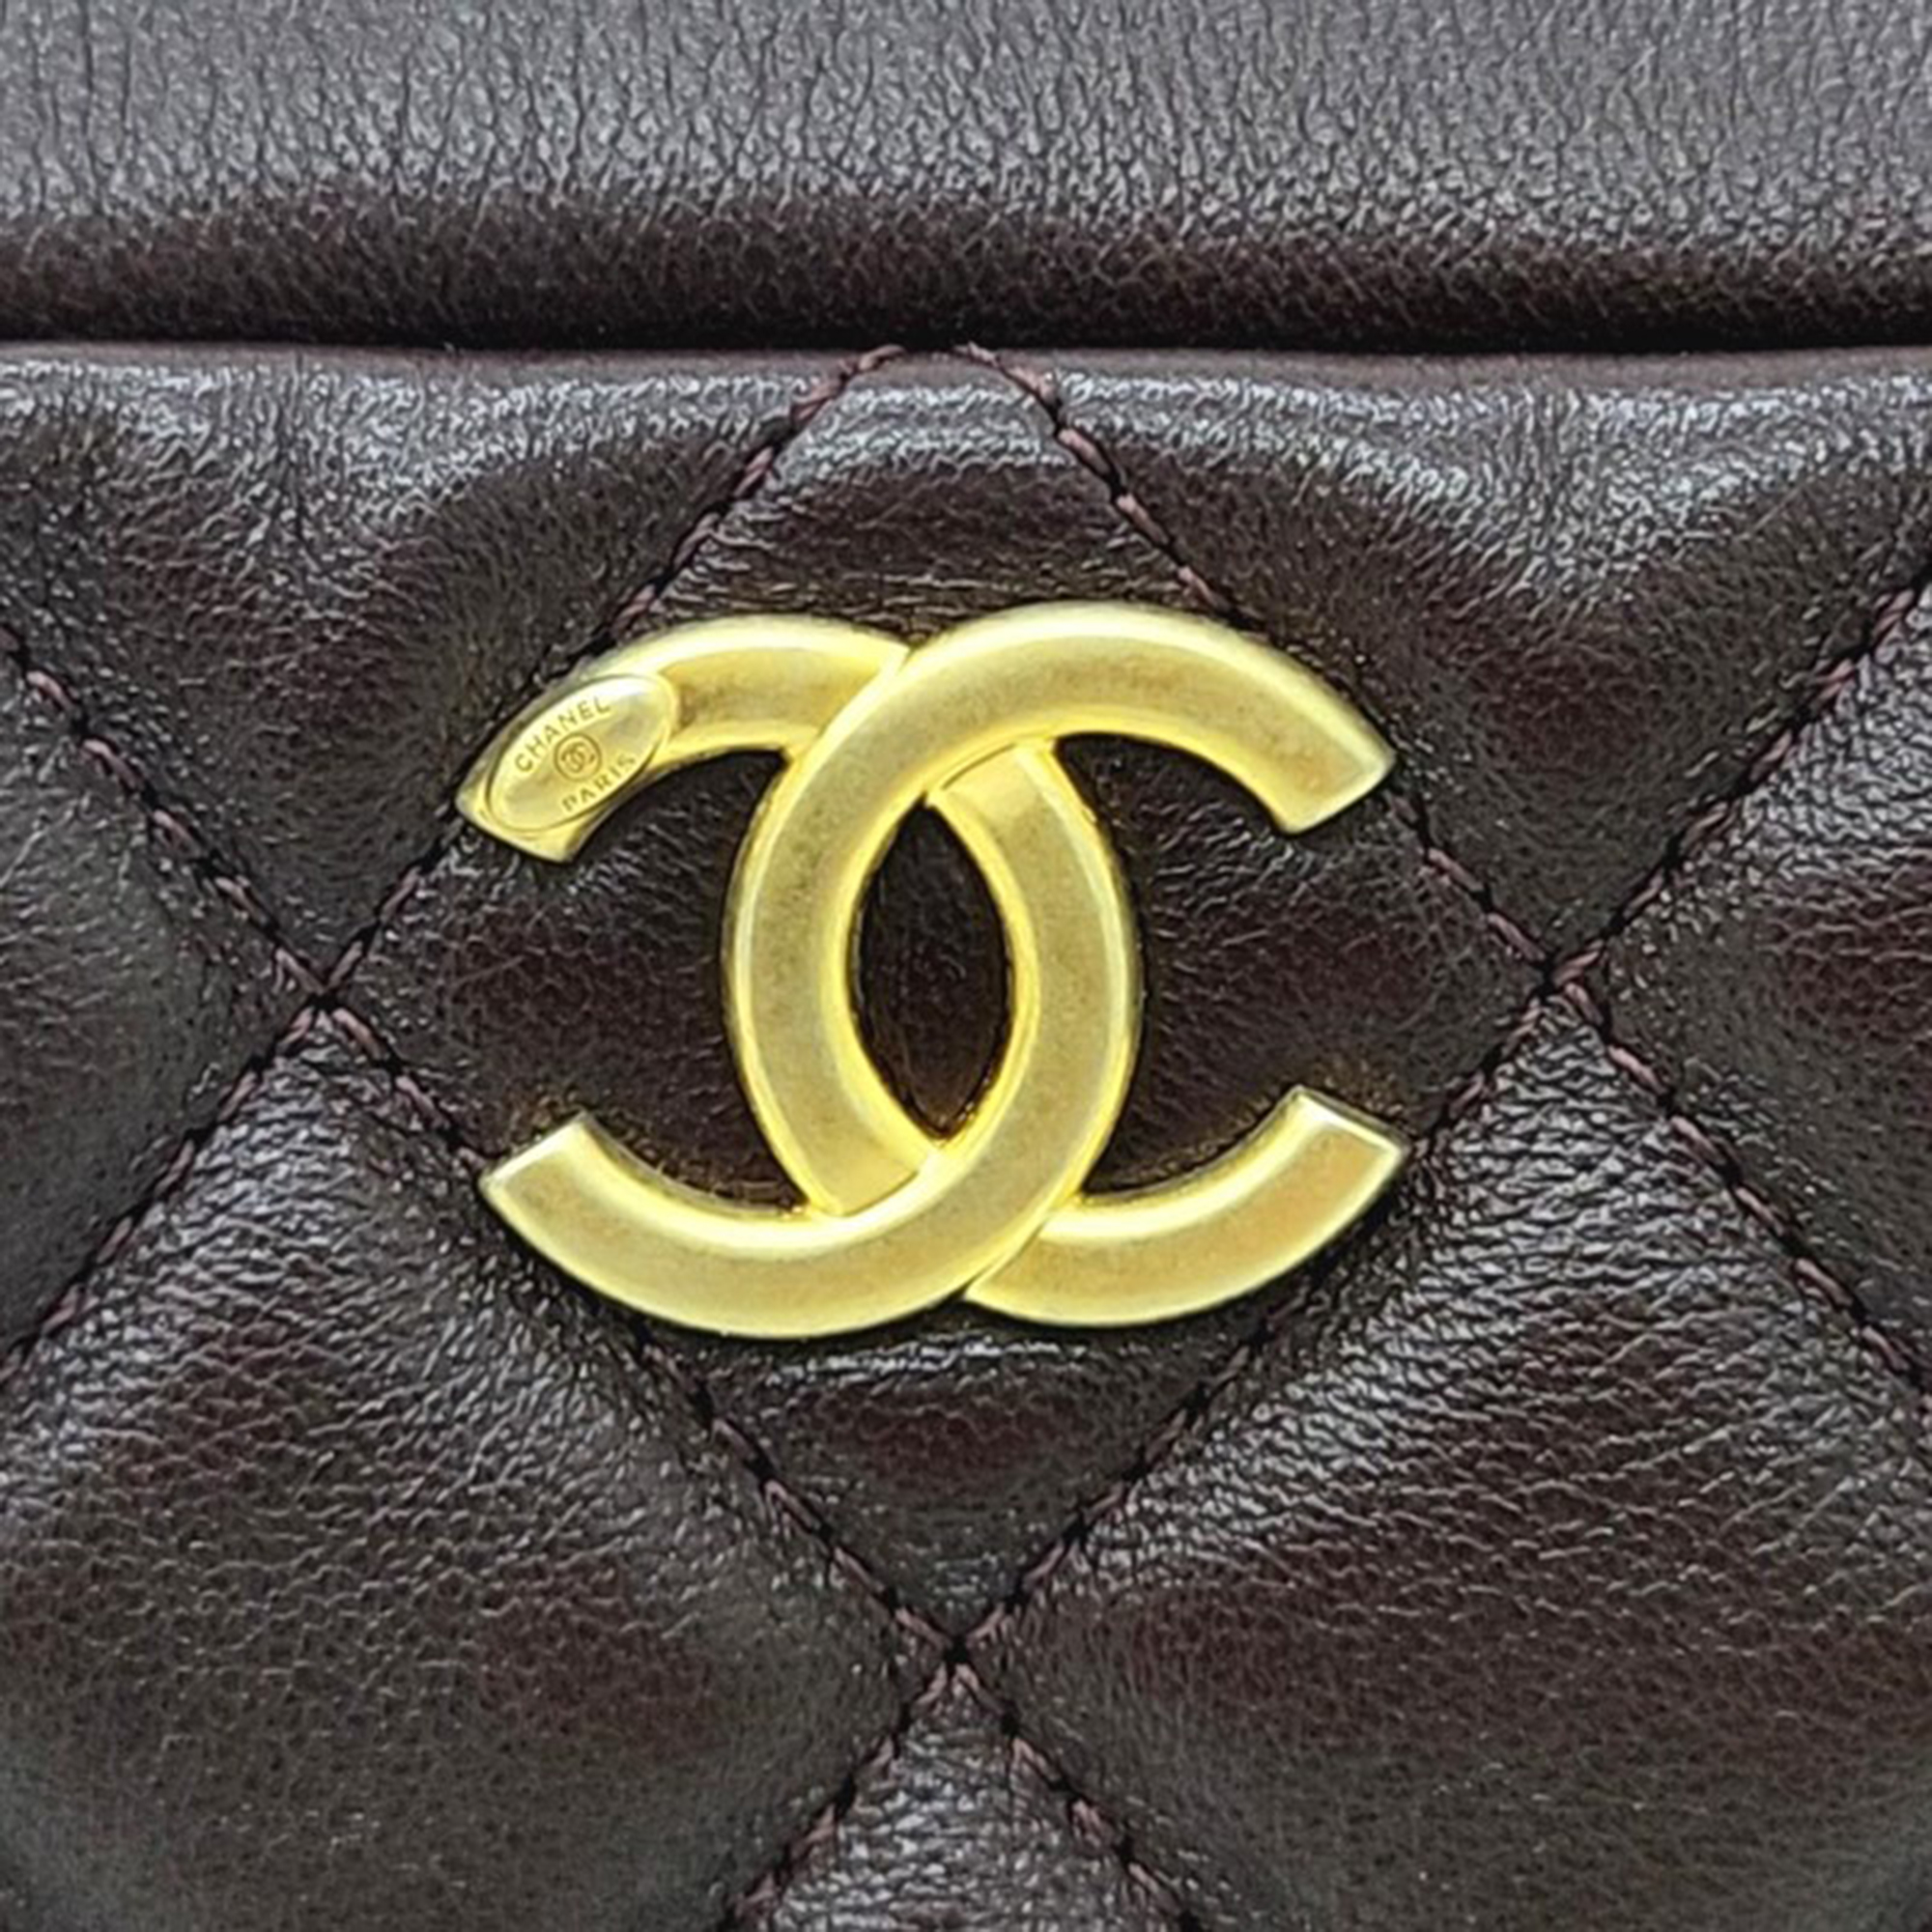 Chanel Leather Burgundy Mini Bowling Bag